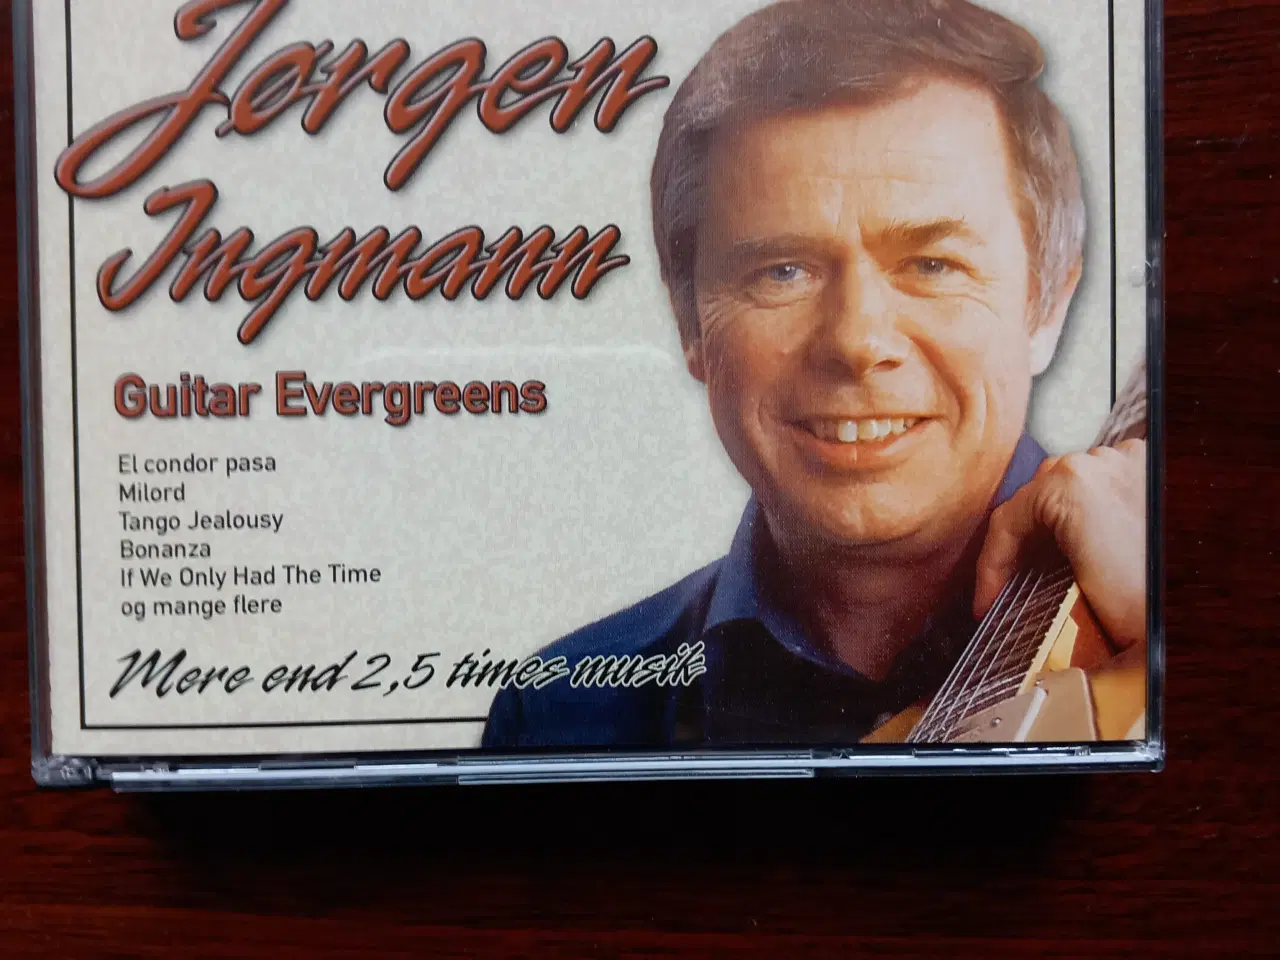 Billede 1 - Jørgen Ingmann guitar evergreens 3 CD boks